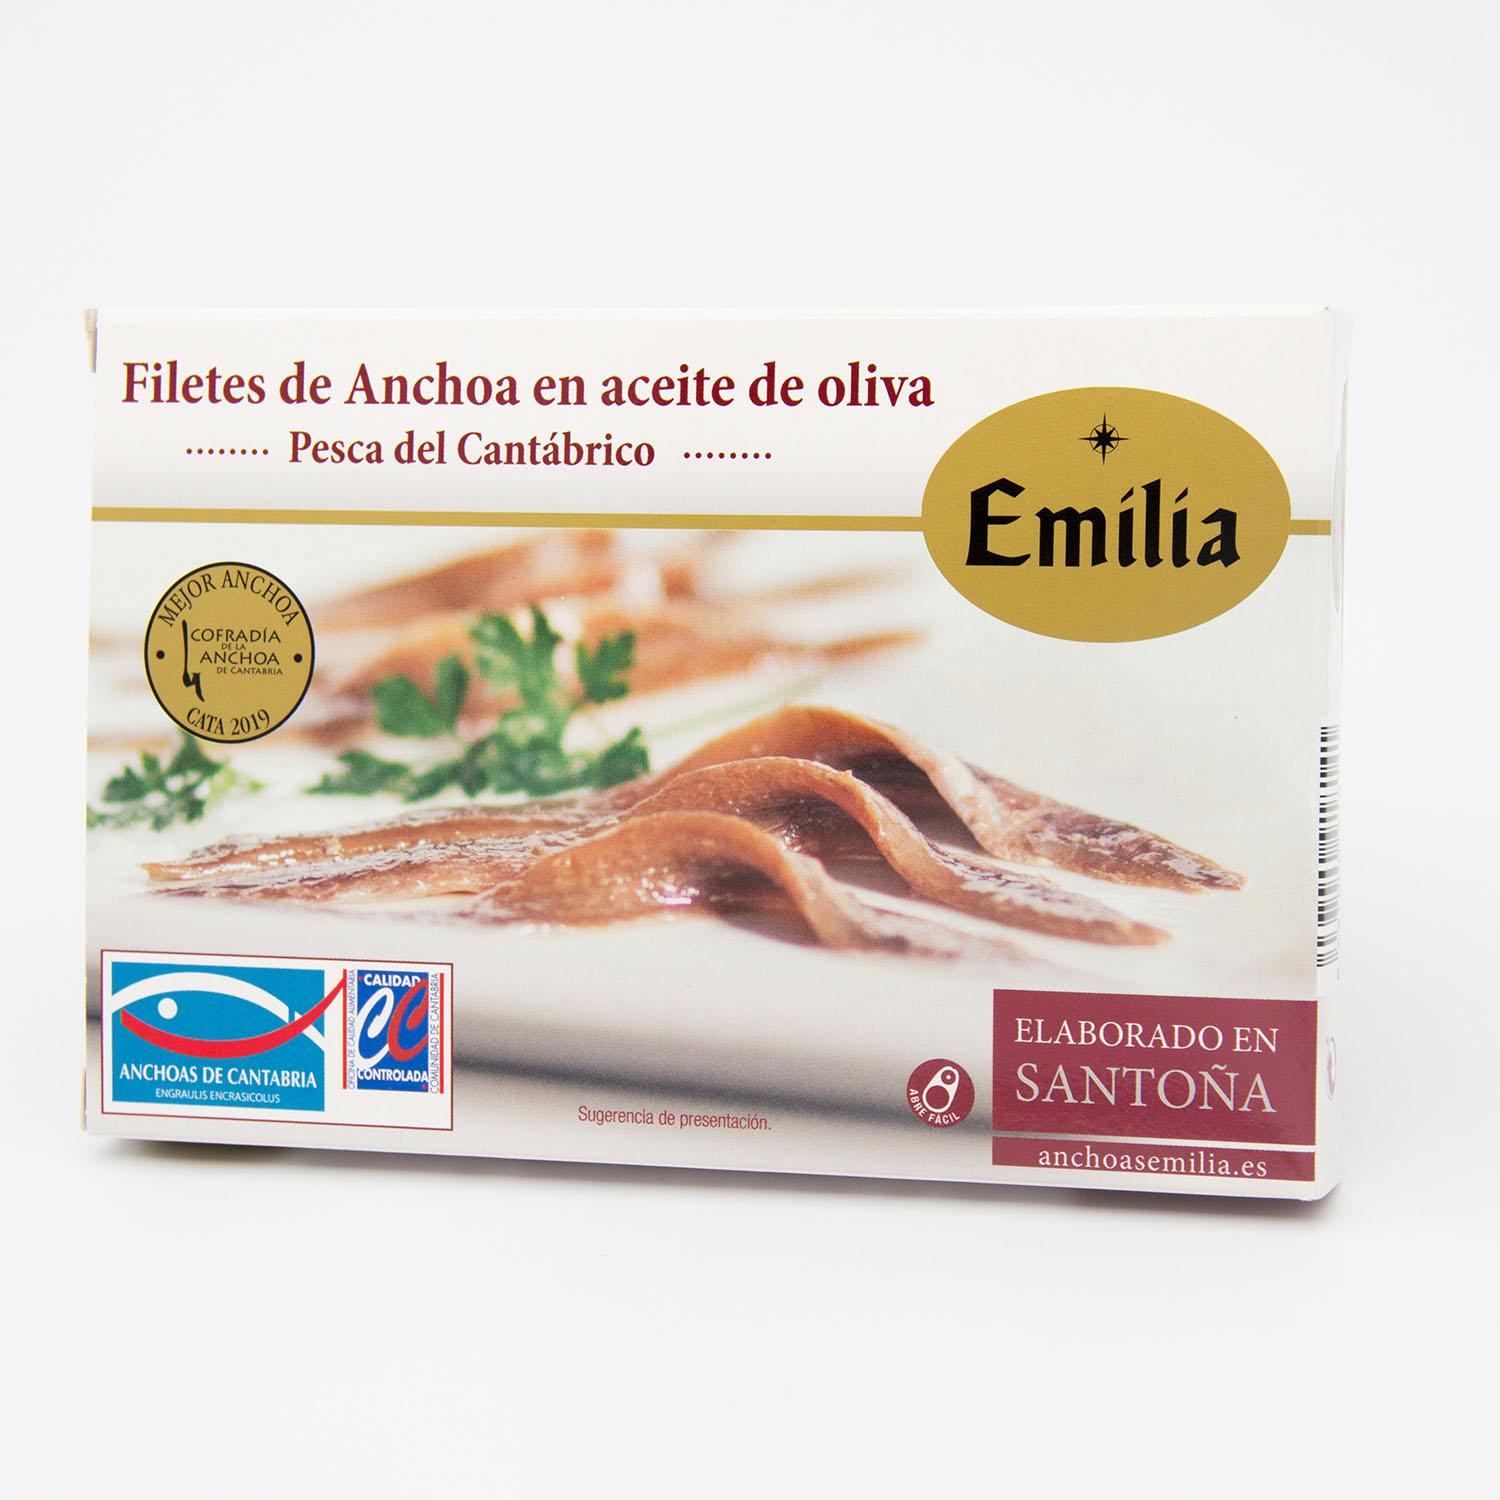 Filetes de anchoa en aceite de oliva Emilia "Serie Oro", 110 gr